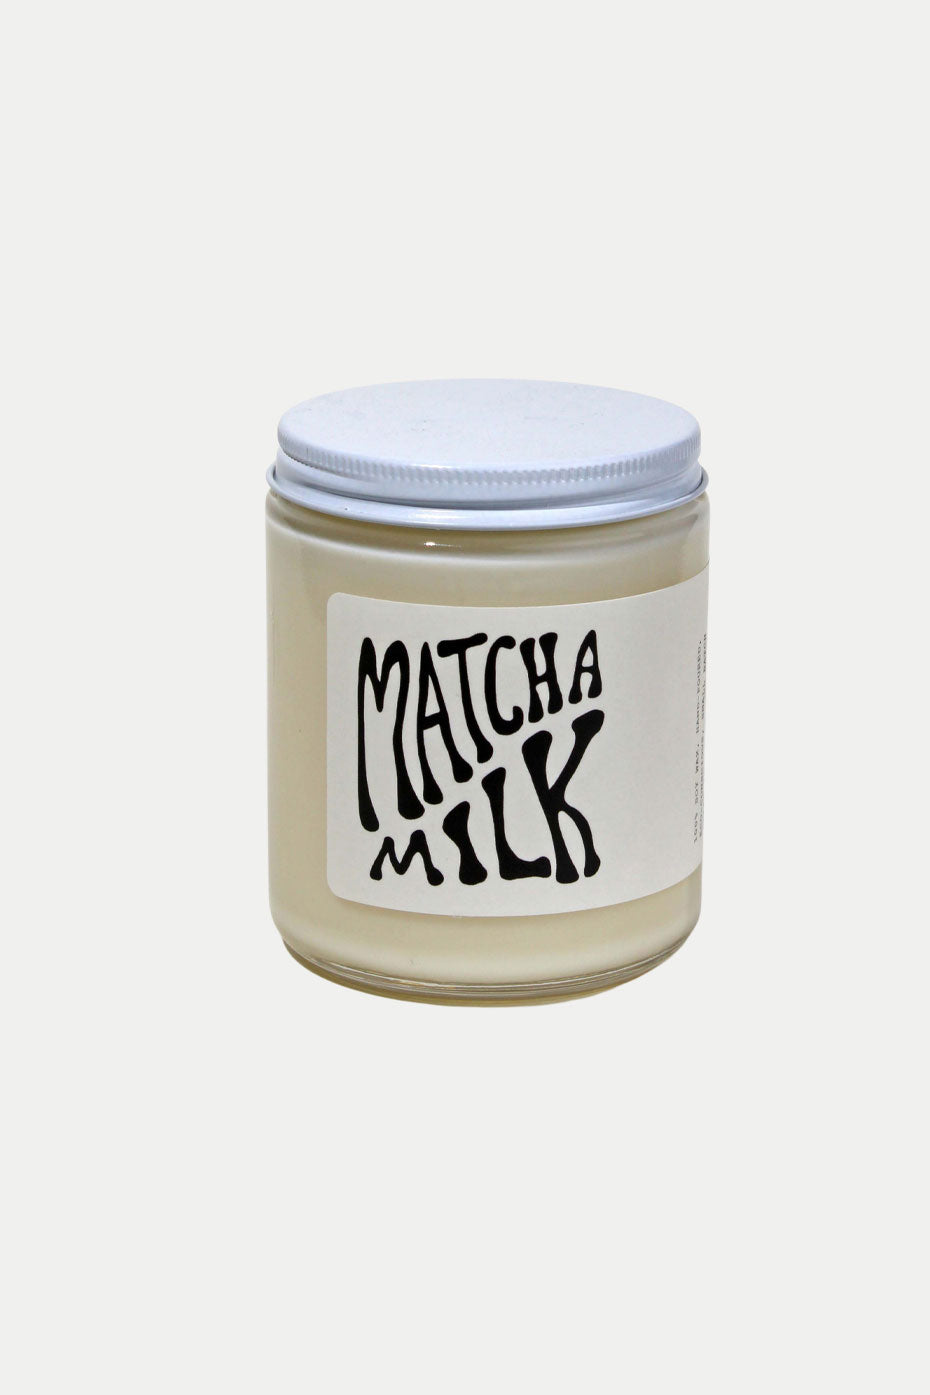 moco-candles-matcha-milk-soy-candle